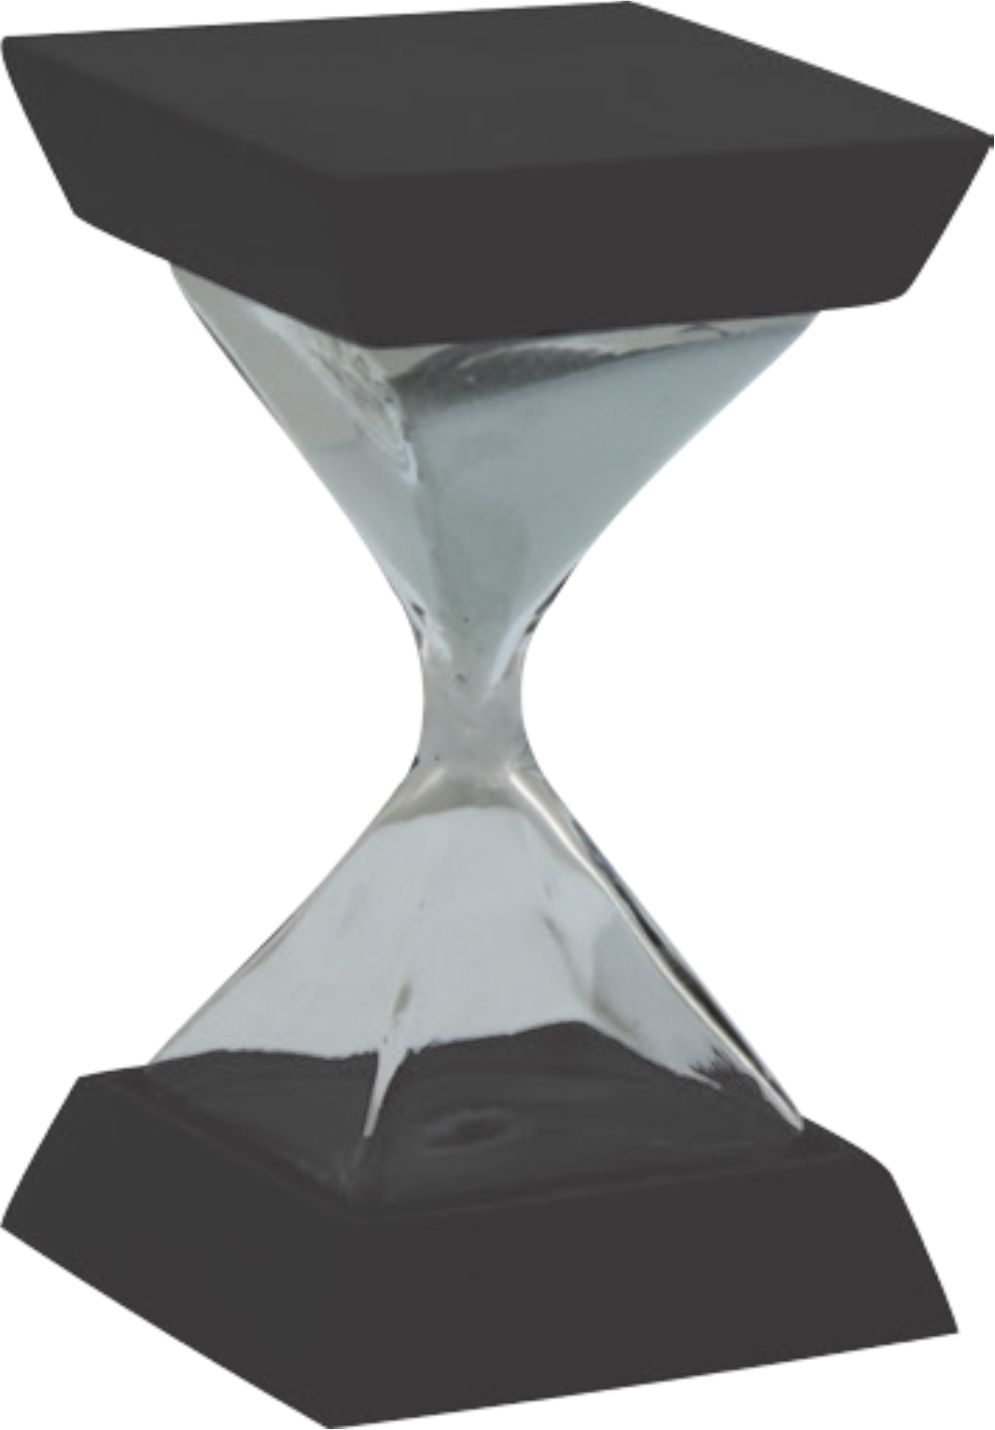 RL109, Reloj de arena en cristal con base de madera altura 10.8 cm